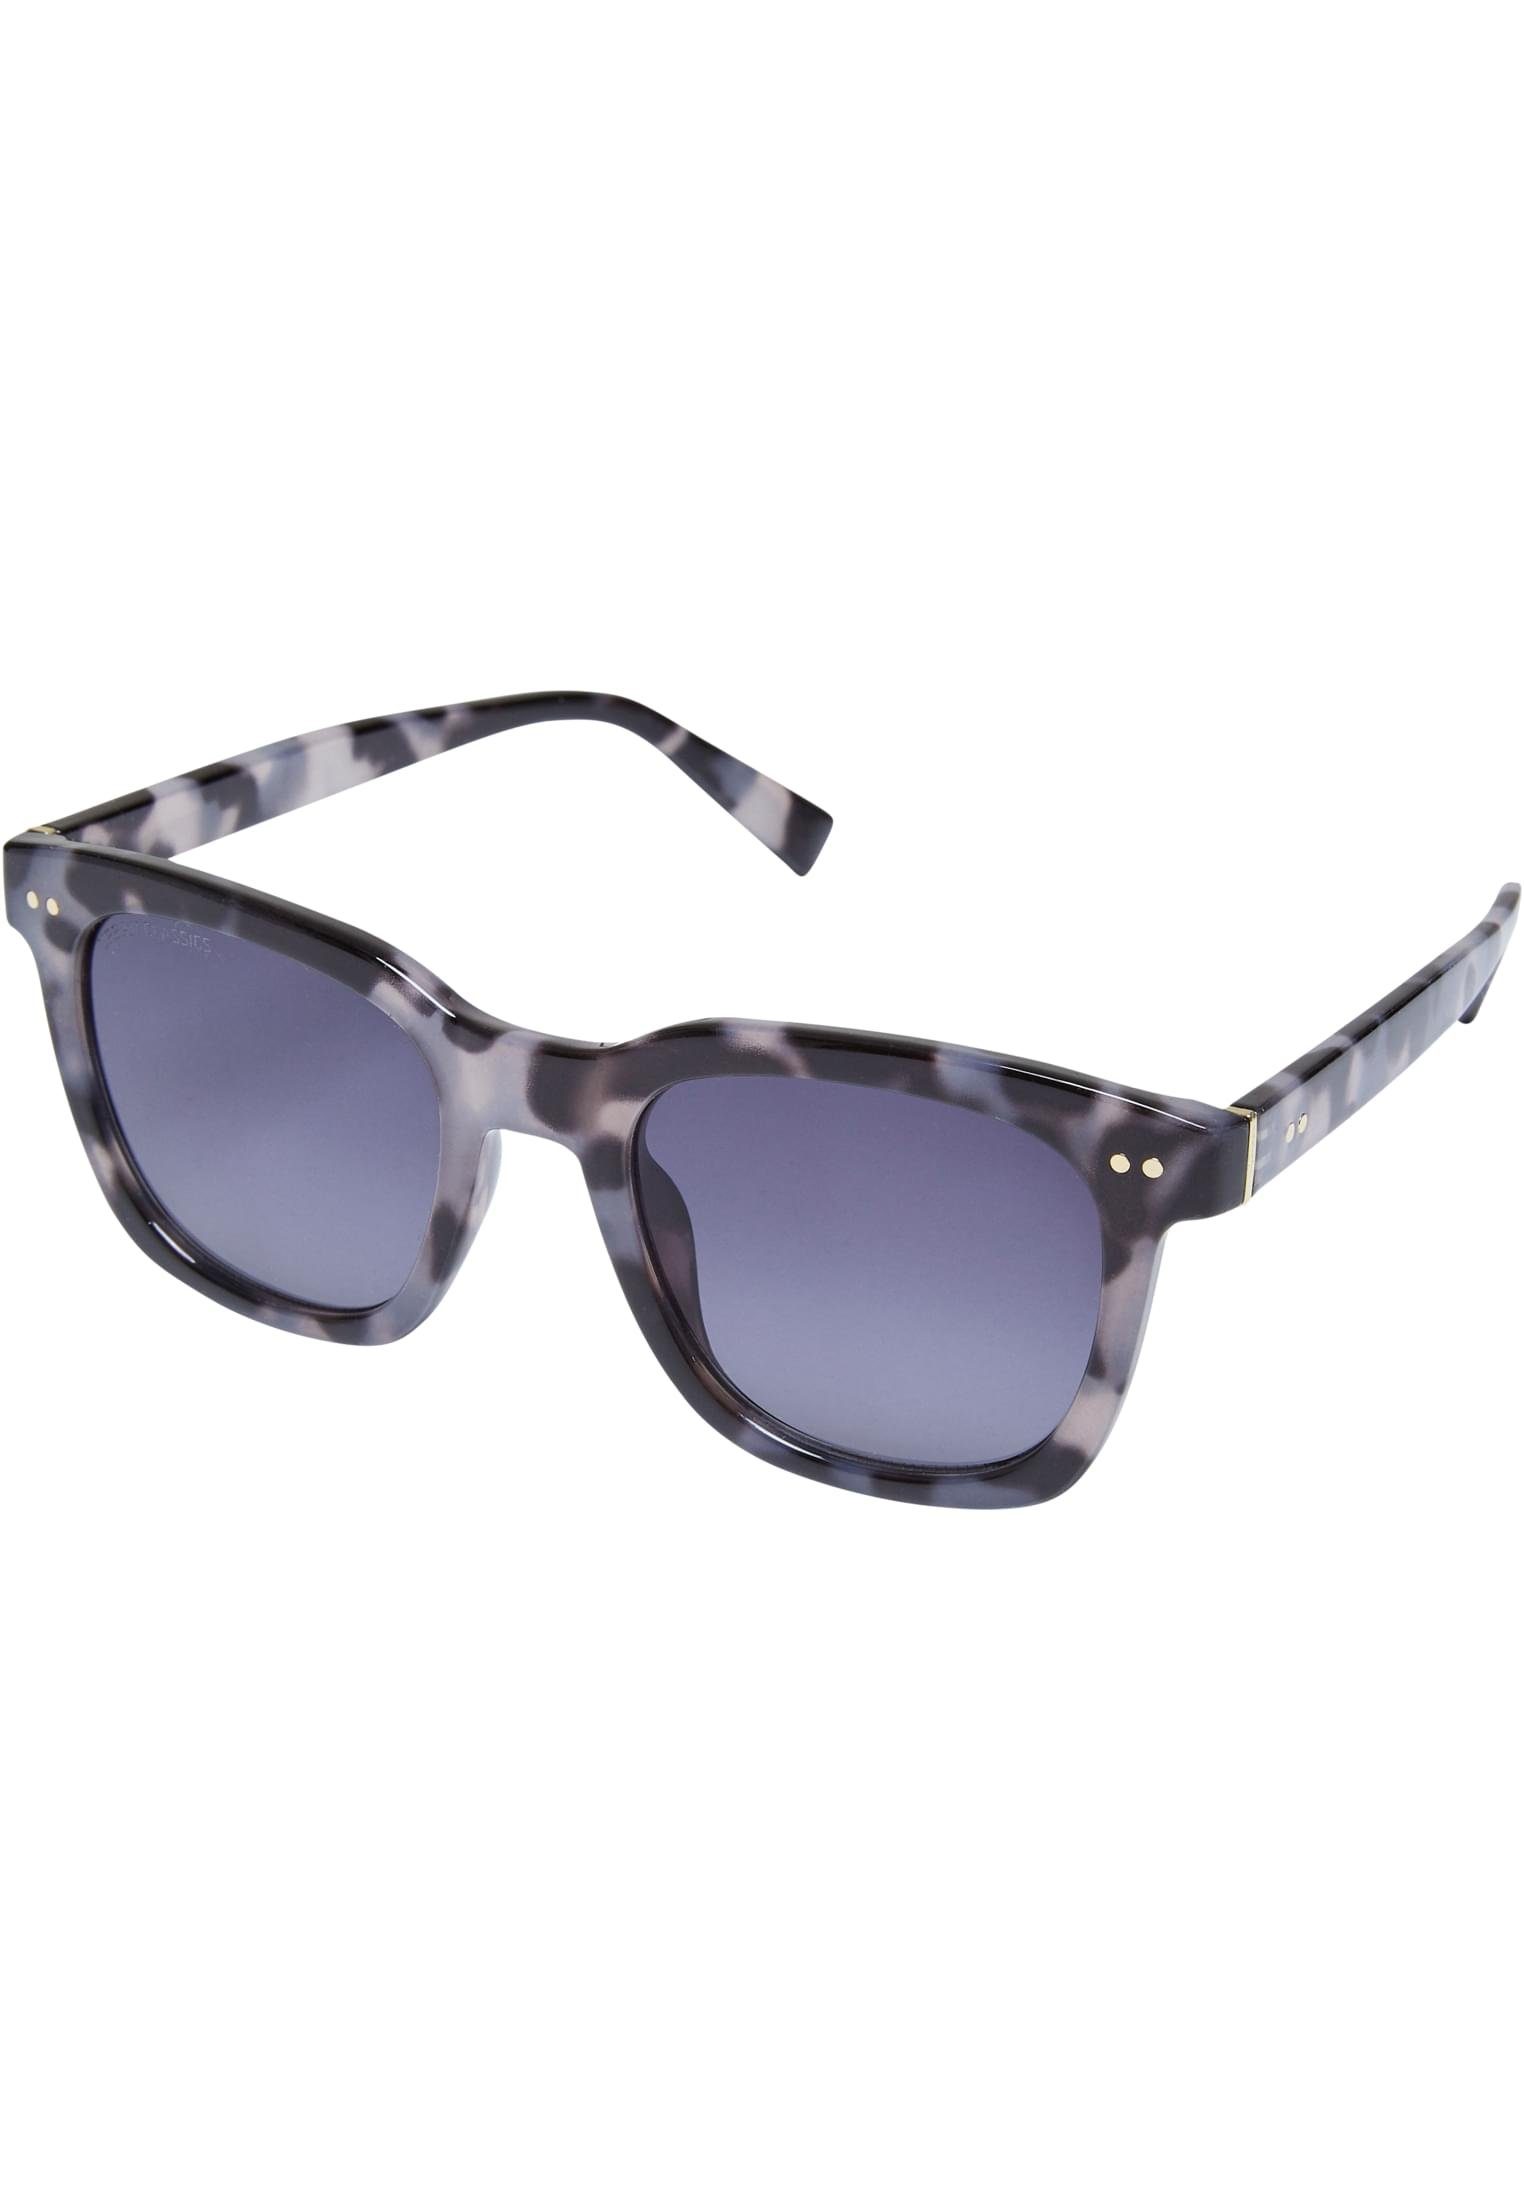 Sonnenbrille Naples amber/black URBAN Sunglasses Unisex CLASSICS